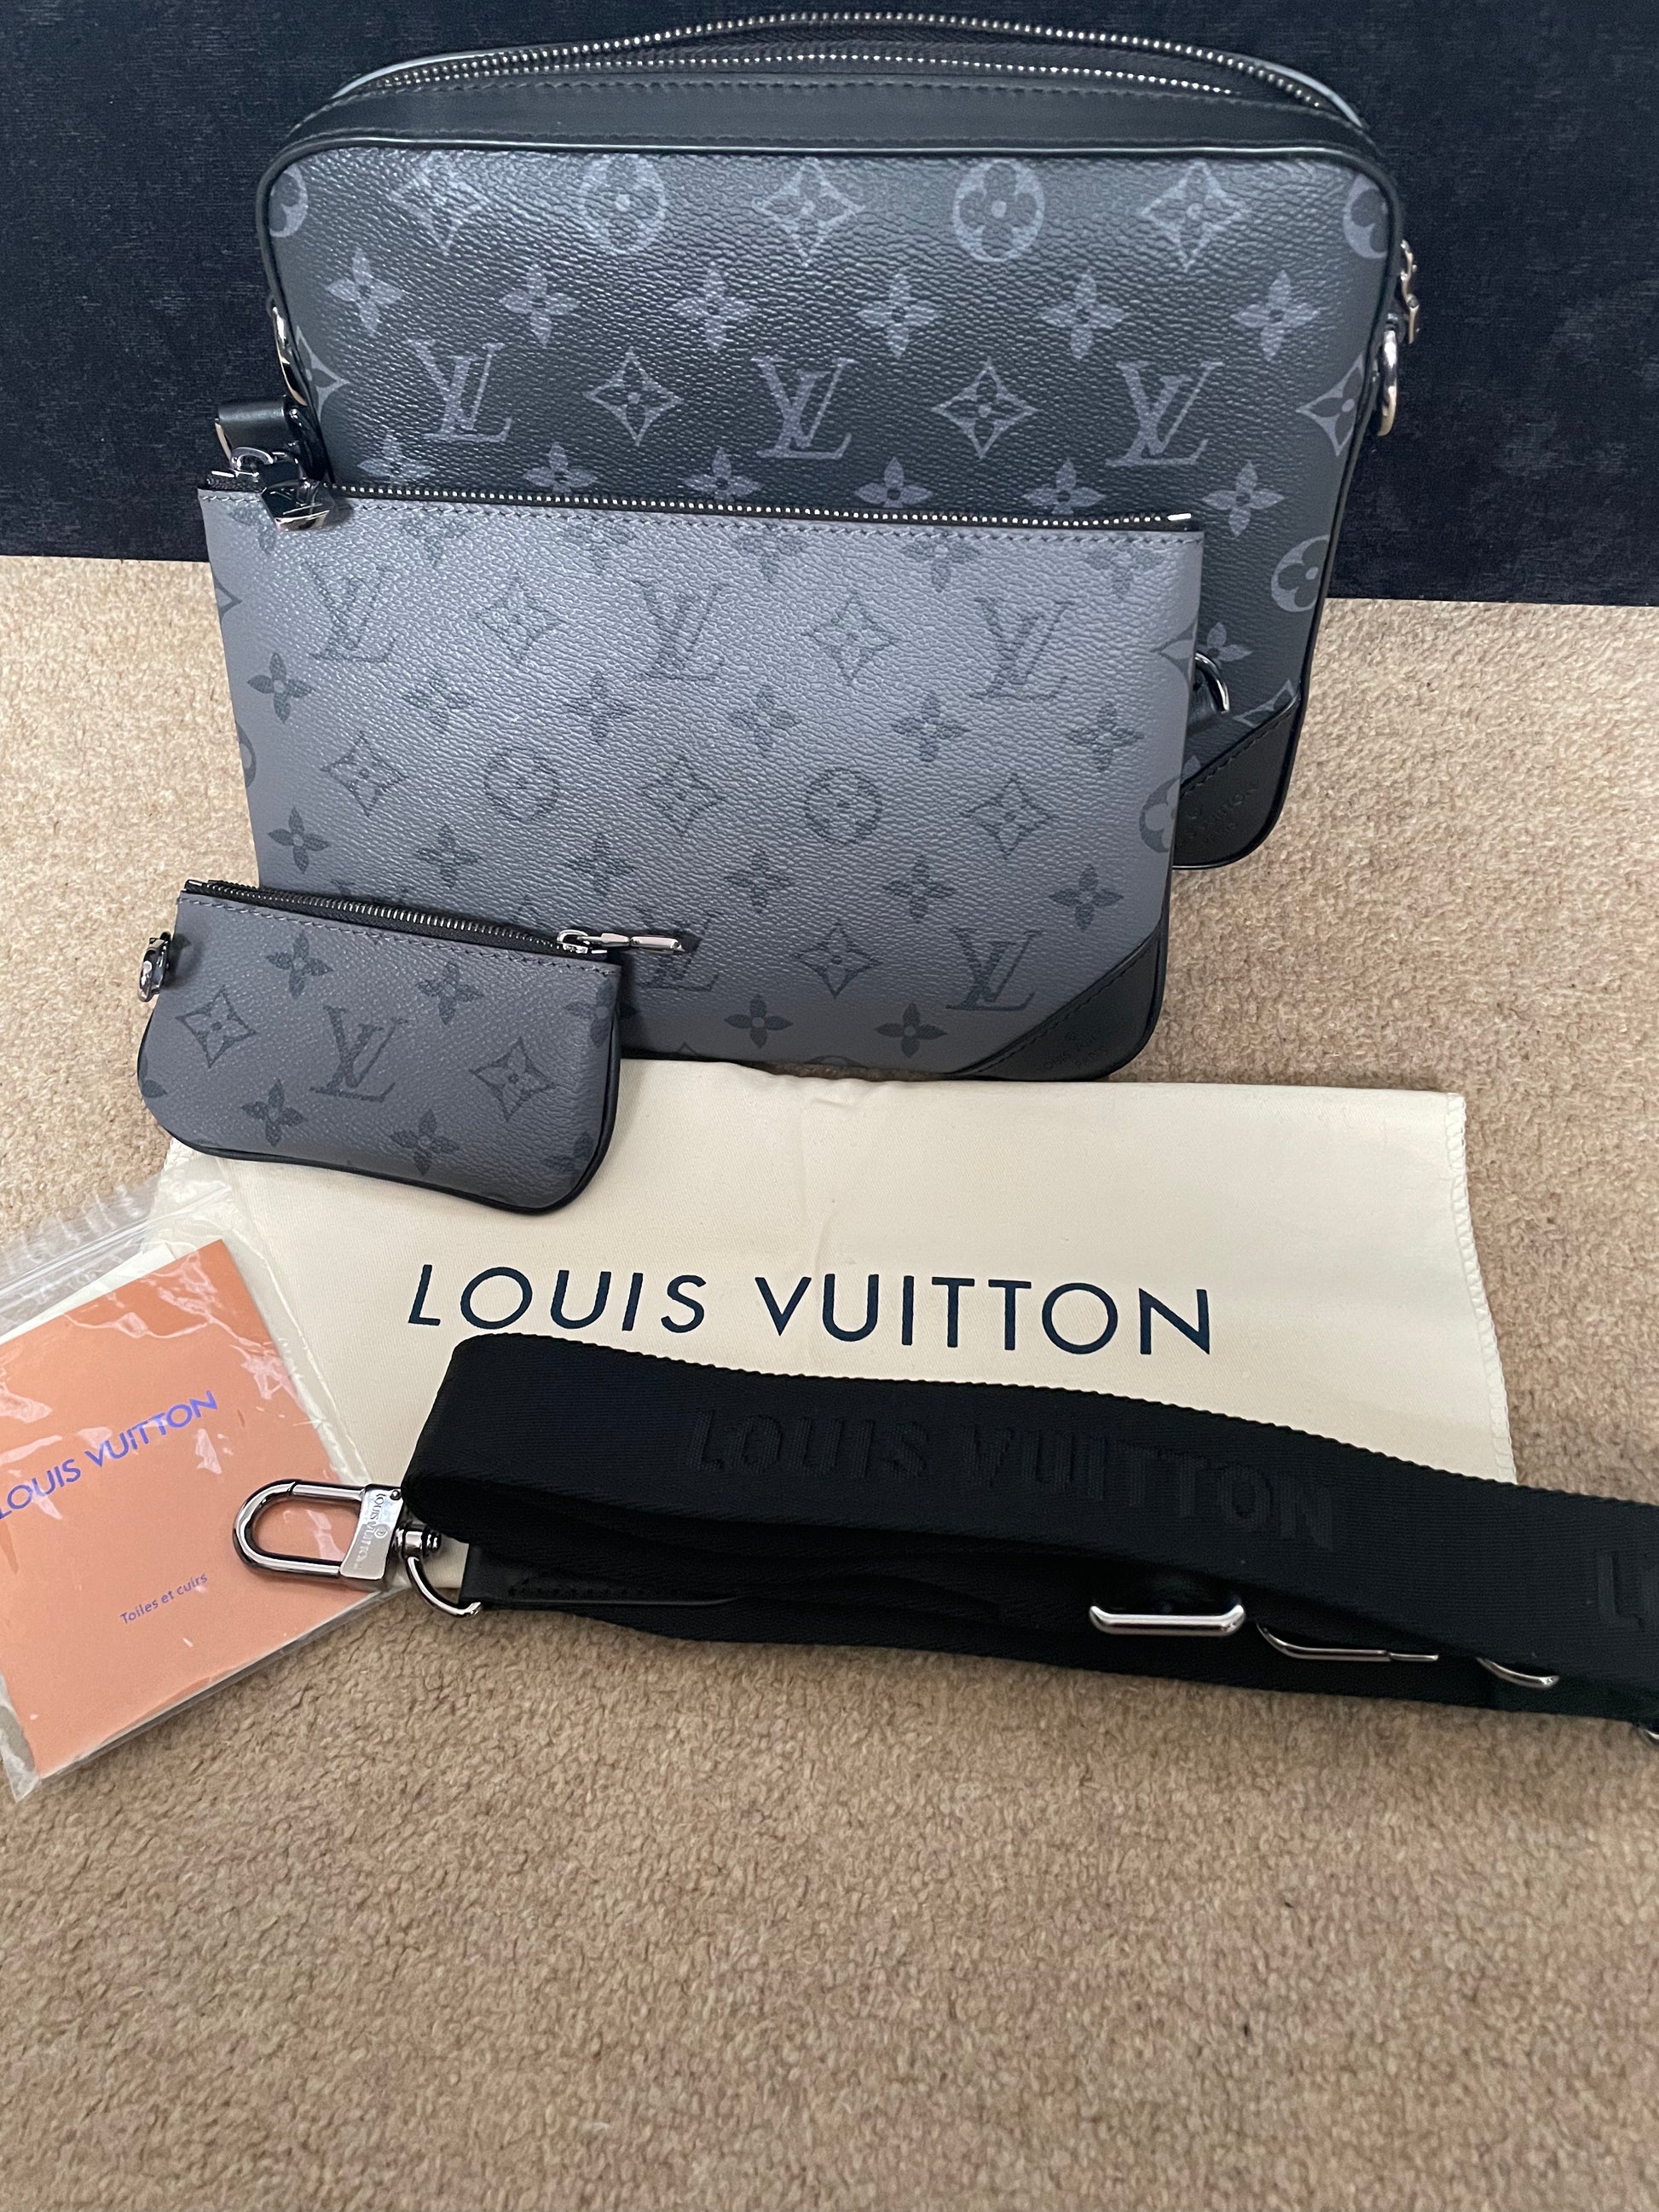 ORDER] Louis Vuitton TRIO MESSENGER